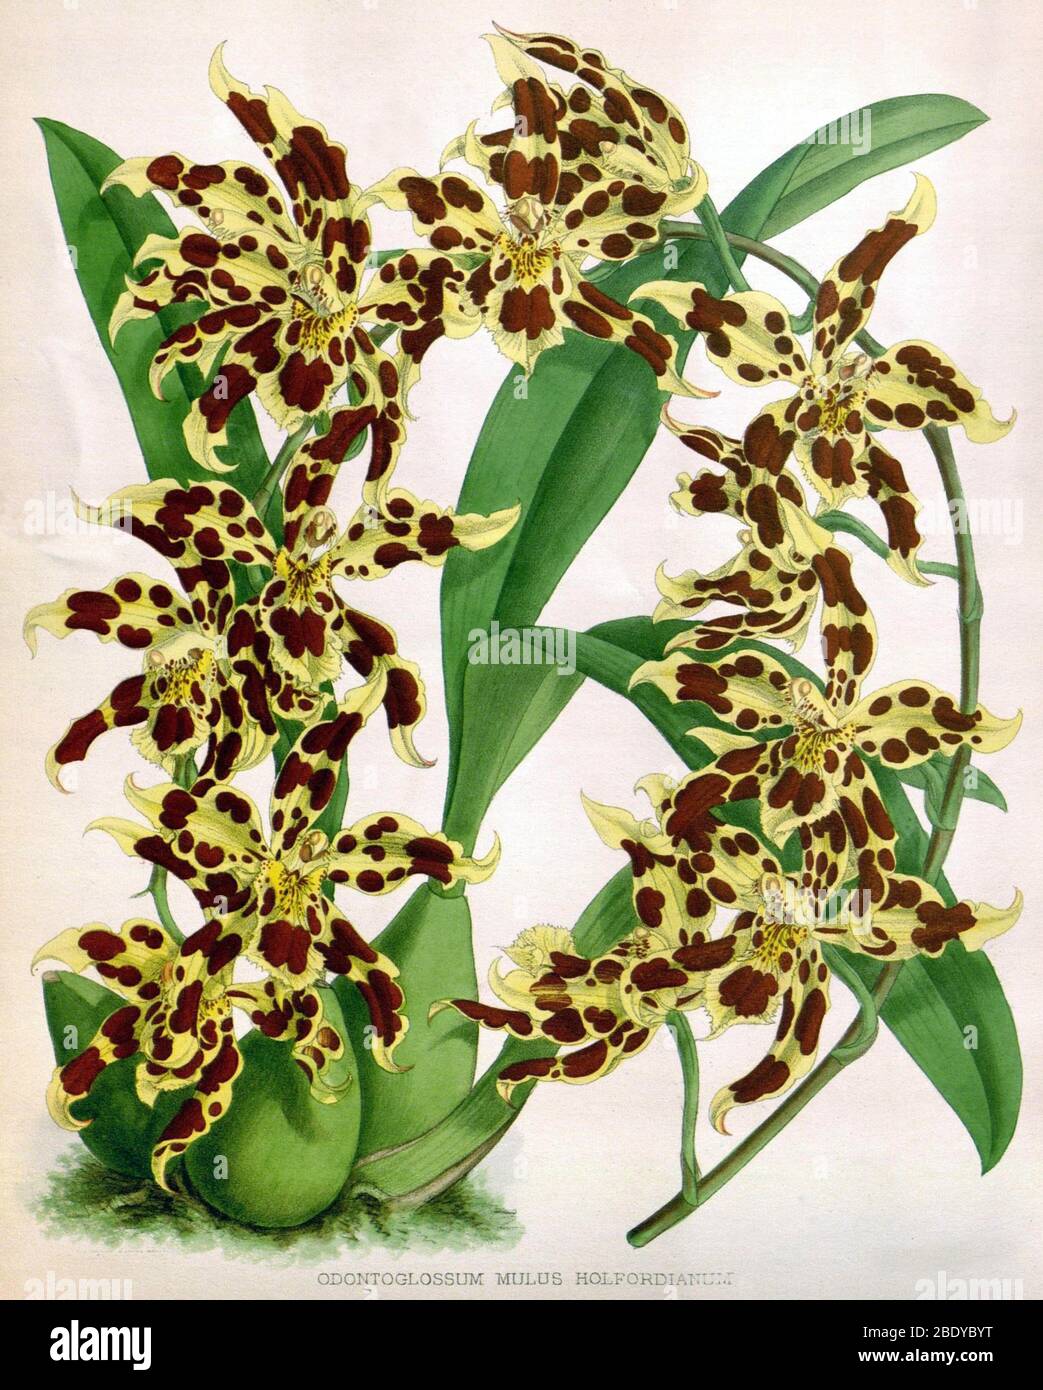 Orchid, O. mulus holfordianum, 1891 Stock Photo